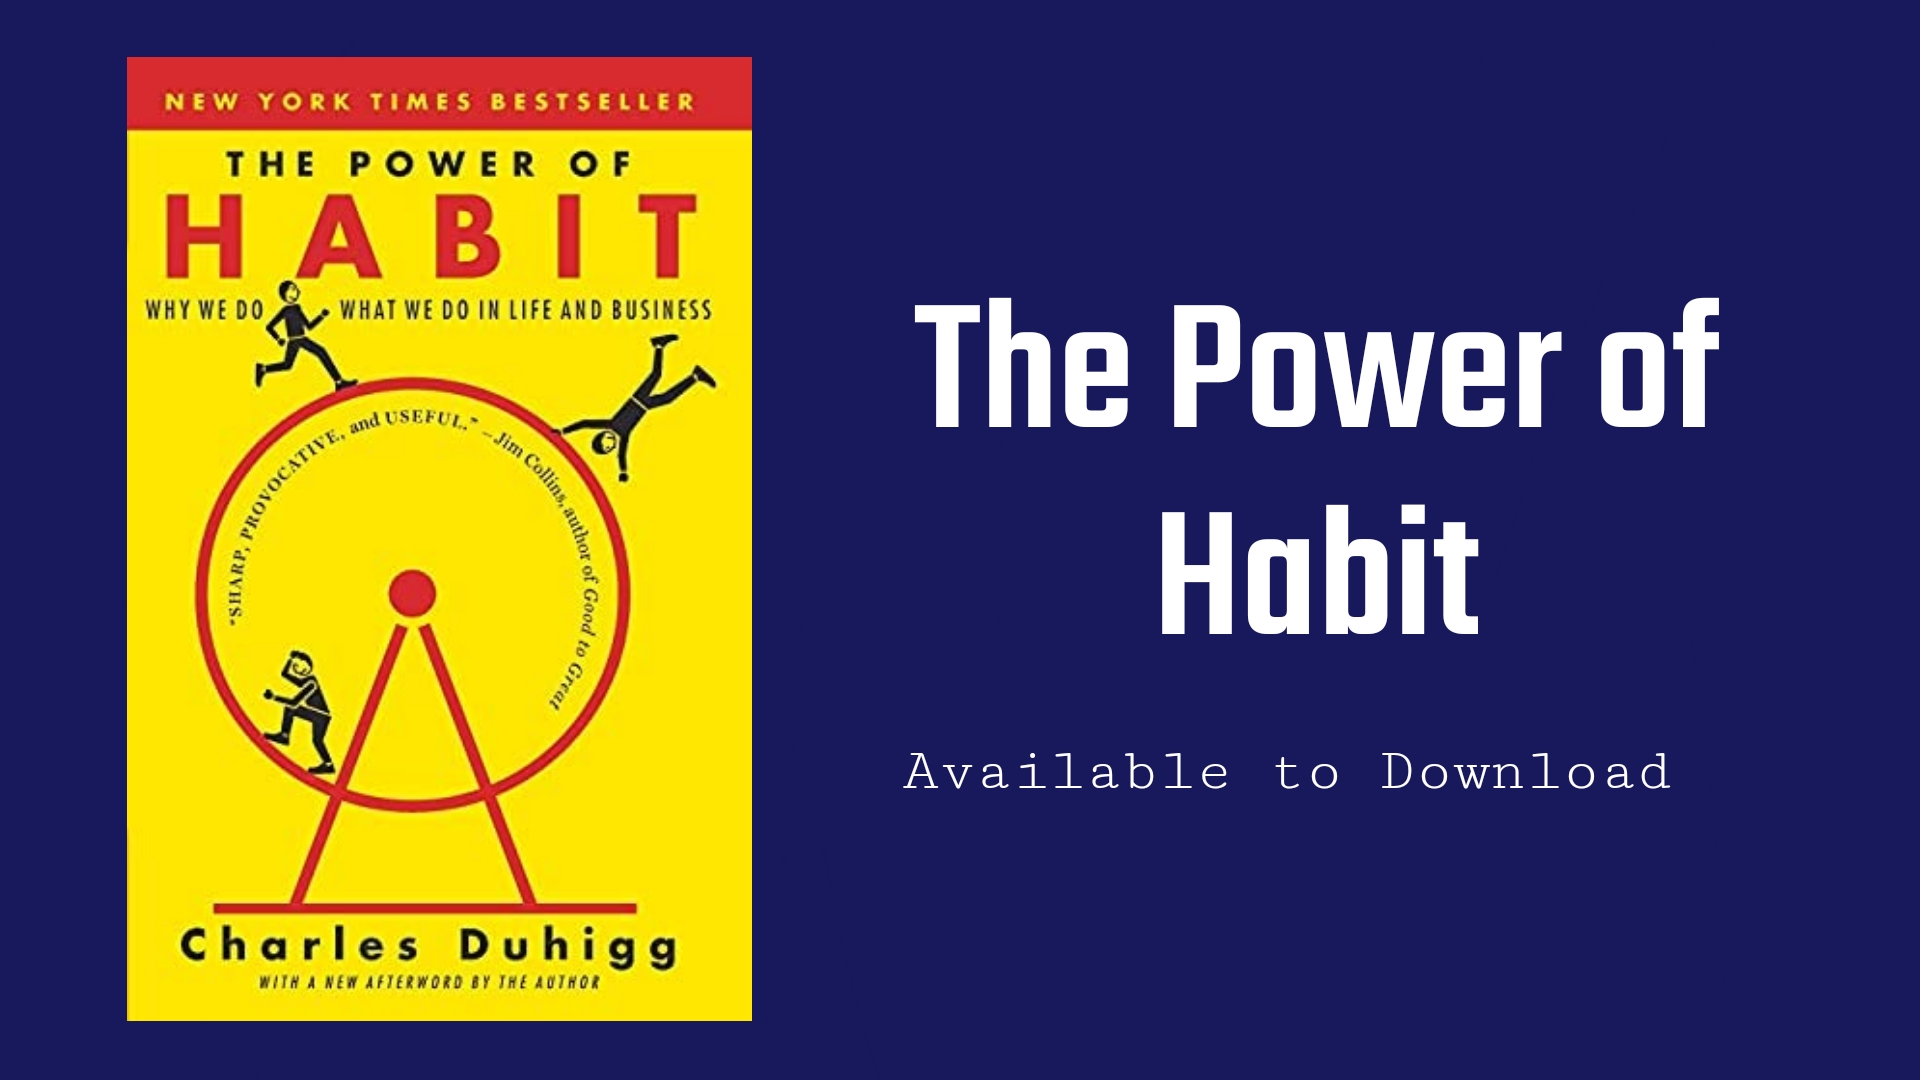 The power of habit pdf